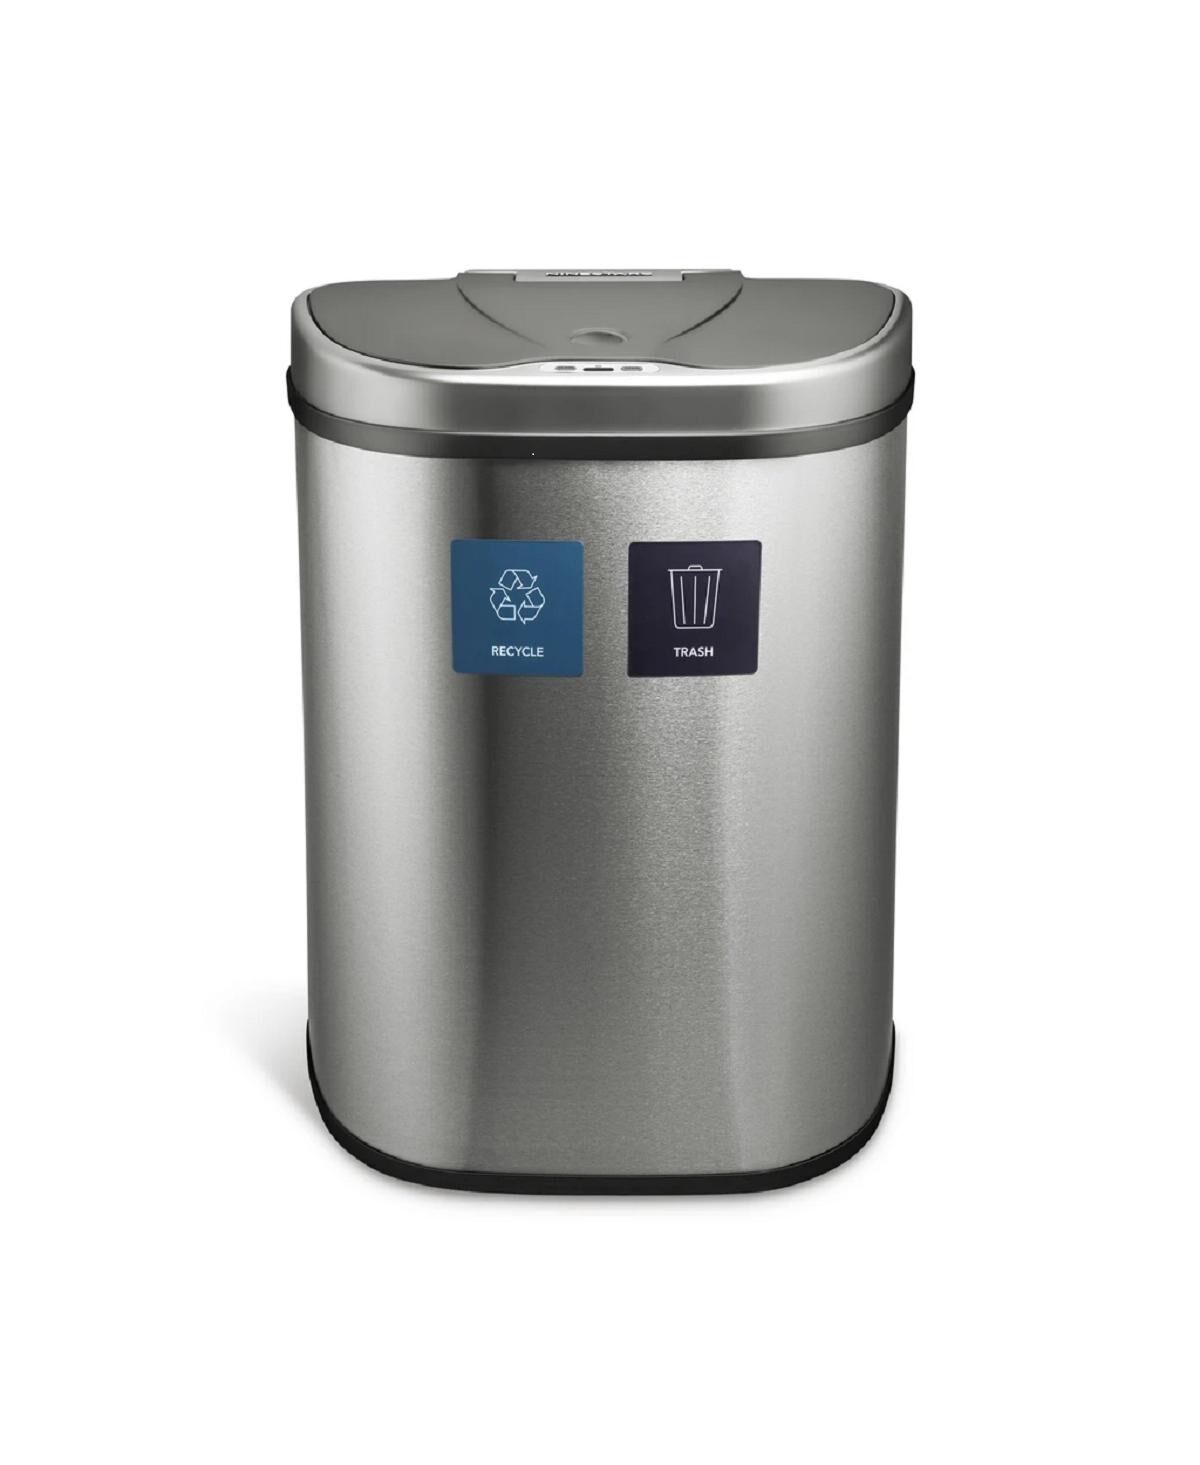 Nine Stars Group Usa Inc Dual Compartment Motion Sensor Trash Can, 18.5 Gallon - Silver Tone